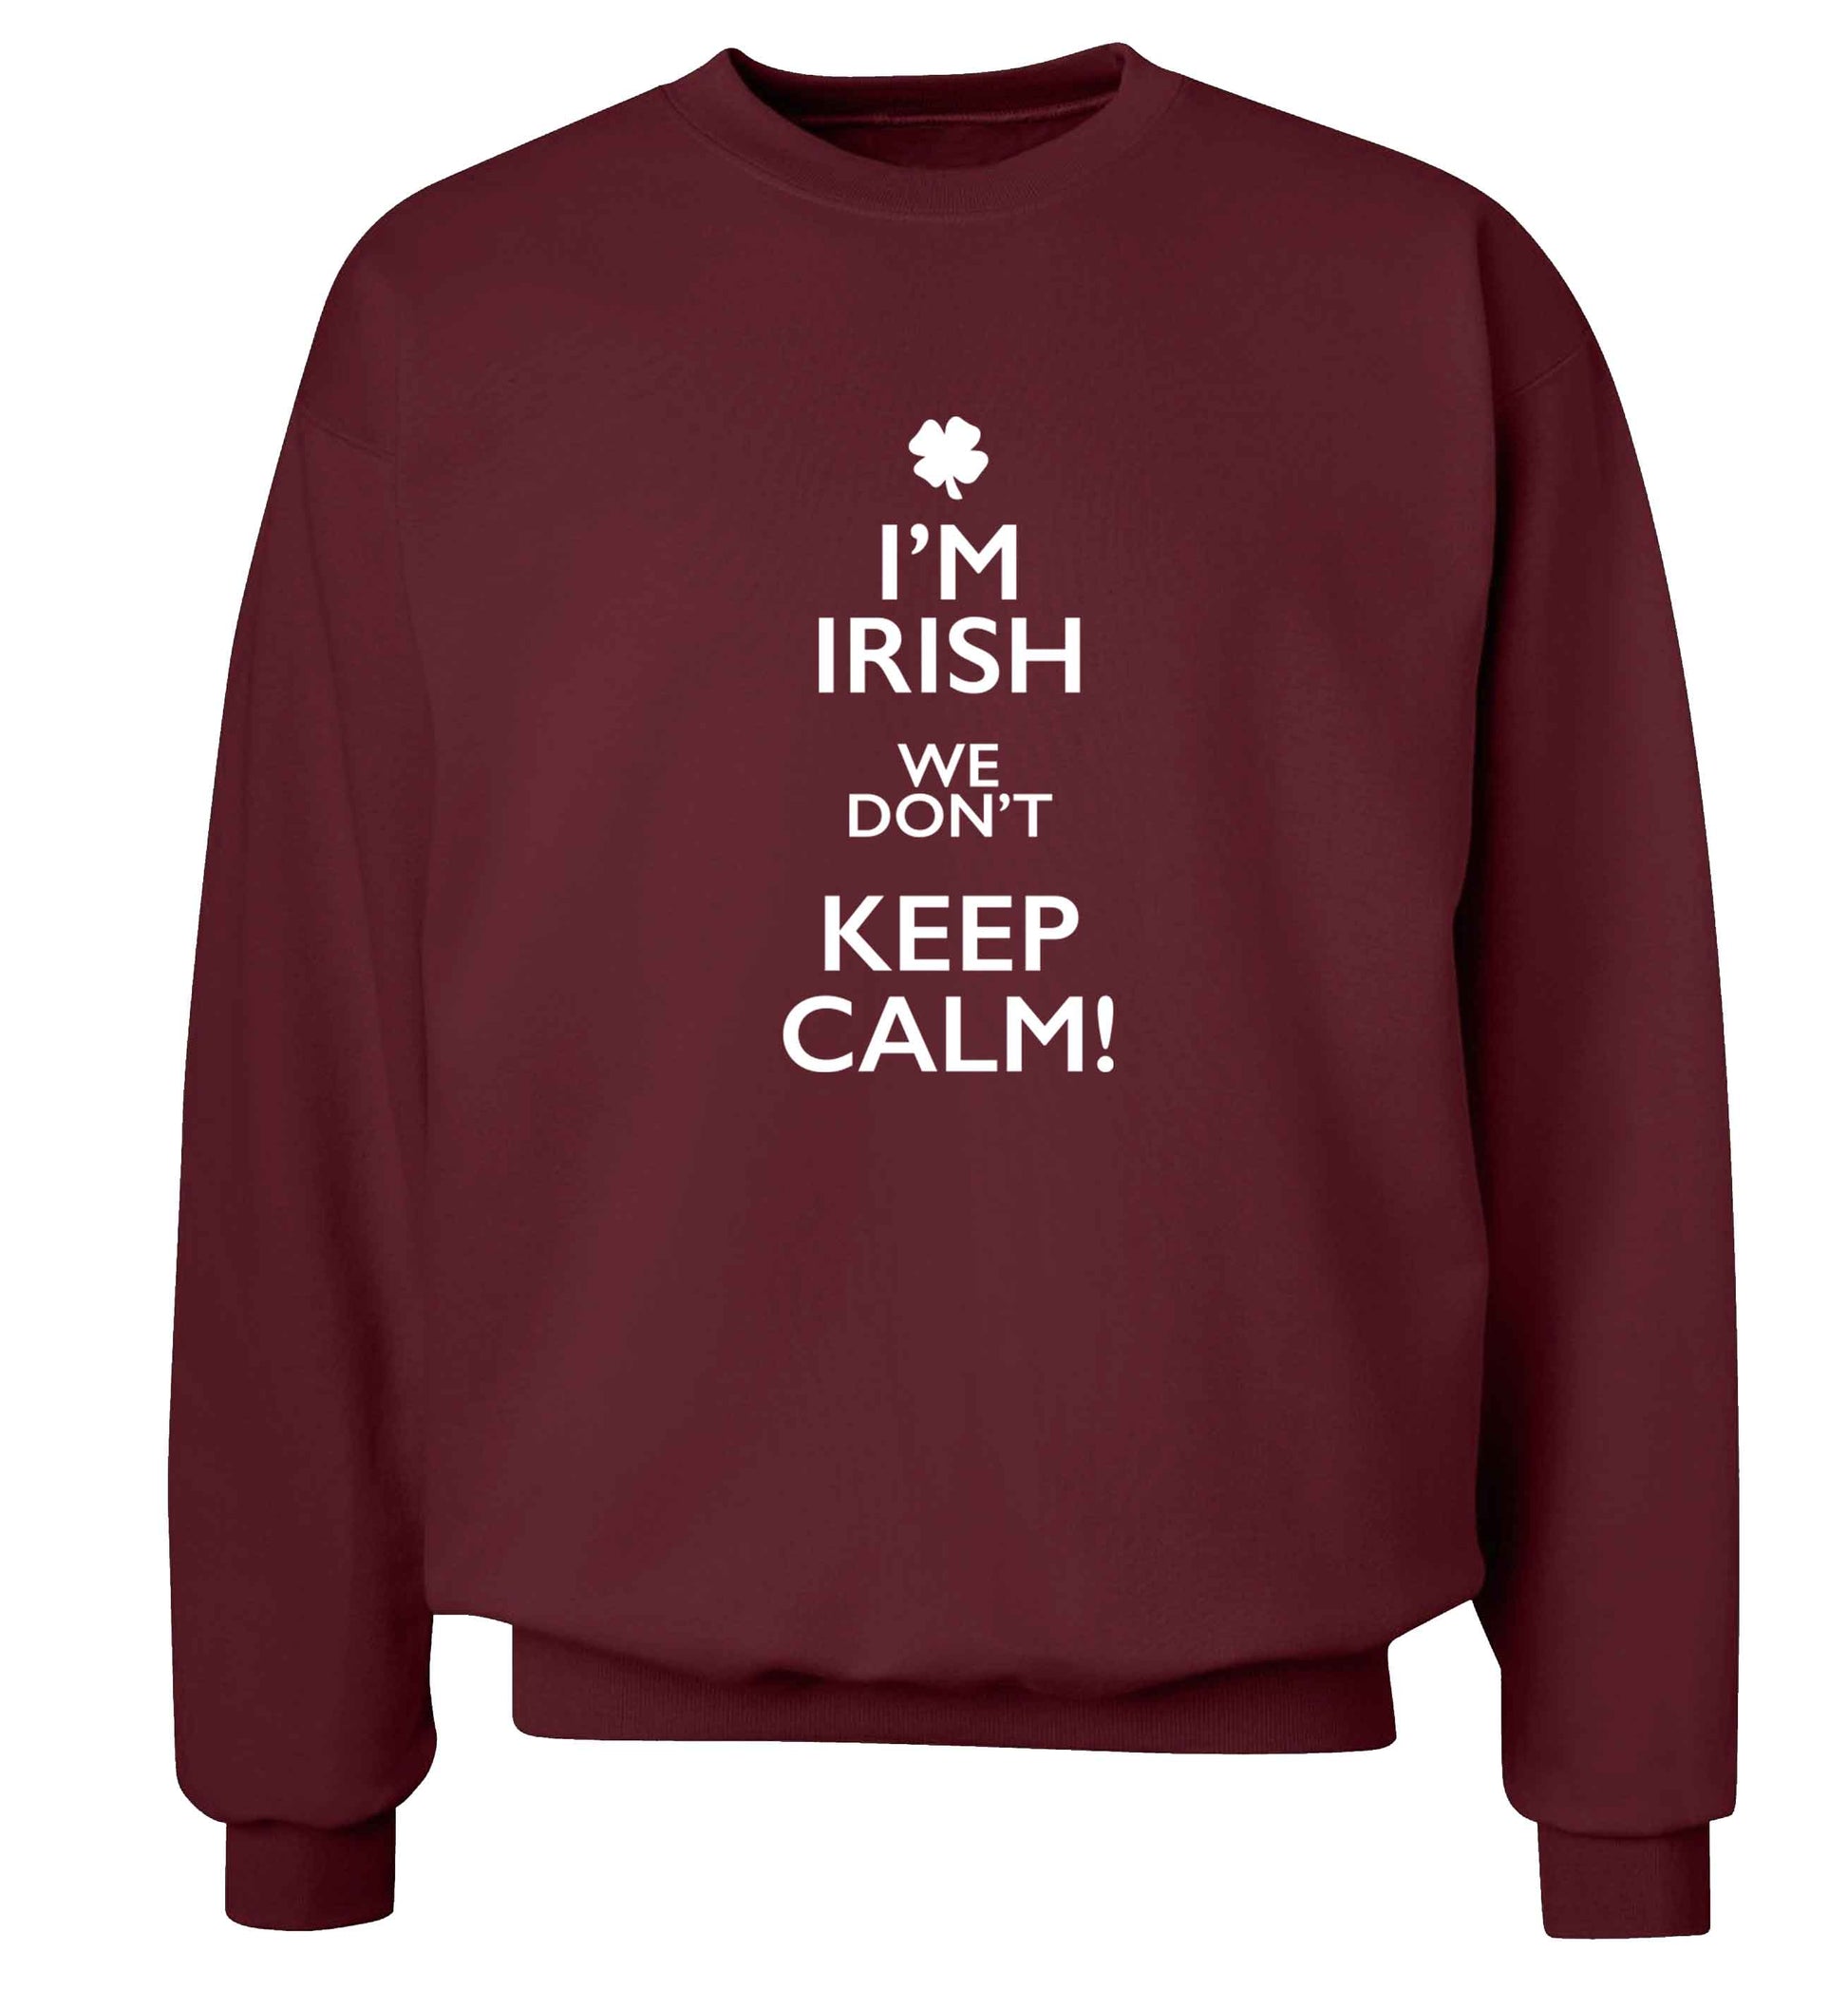 I'm Irish we don't keep calm adult's unisex maroon sweater 2XL